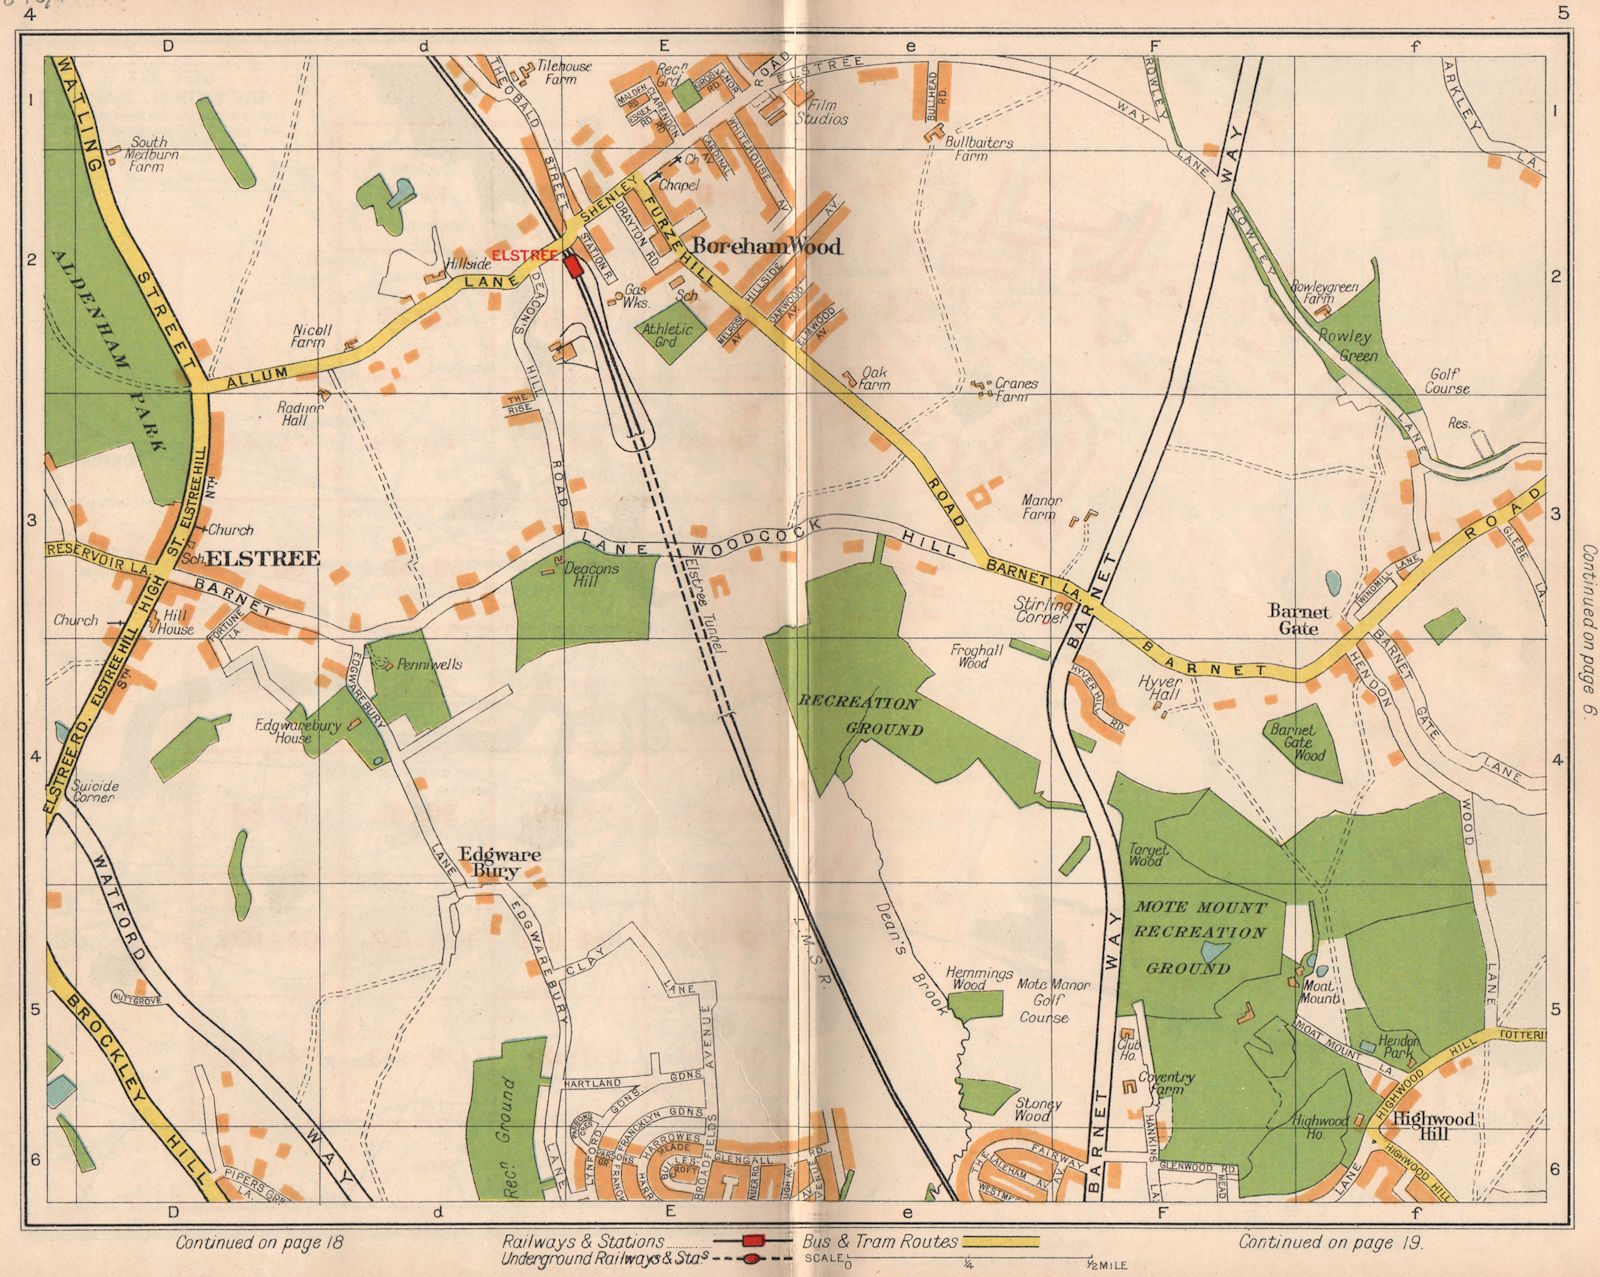 Associate Product NW LONDON. Elstree Borehamwood Edgwarebury Barnet Gate Highwood Hill 1938 map